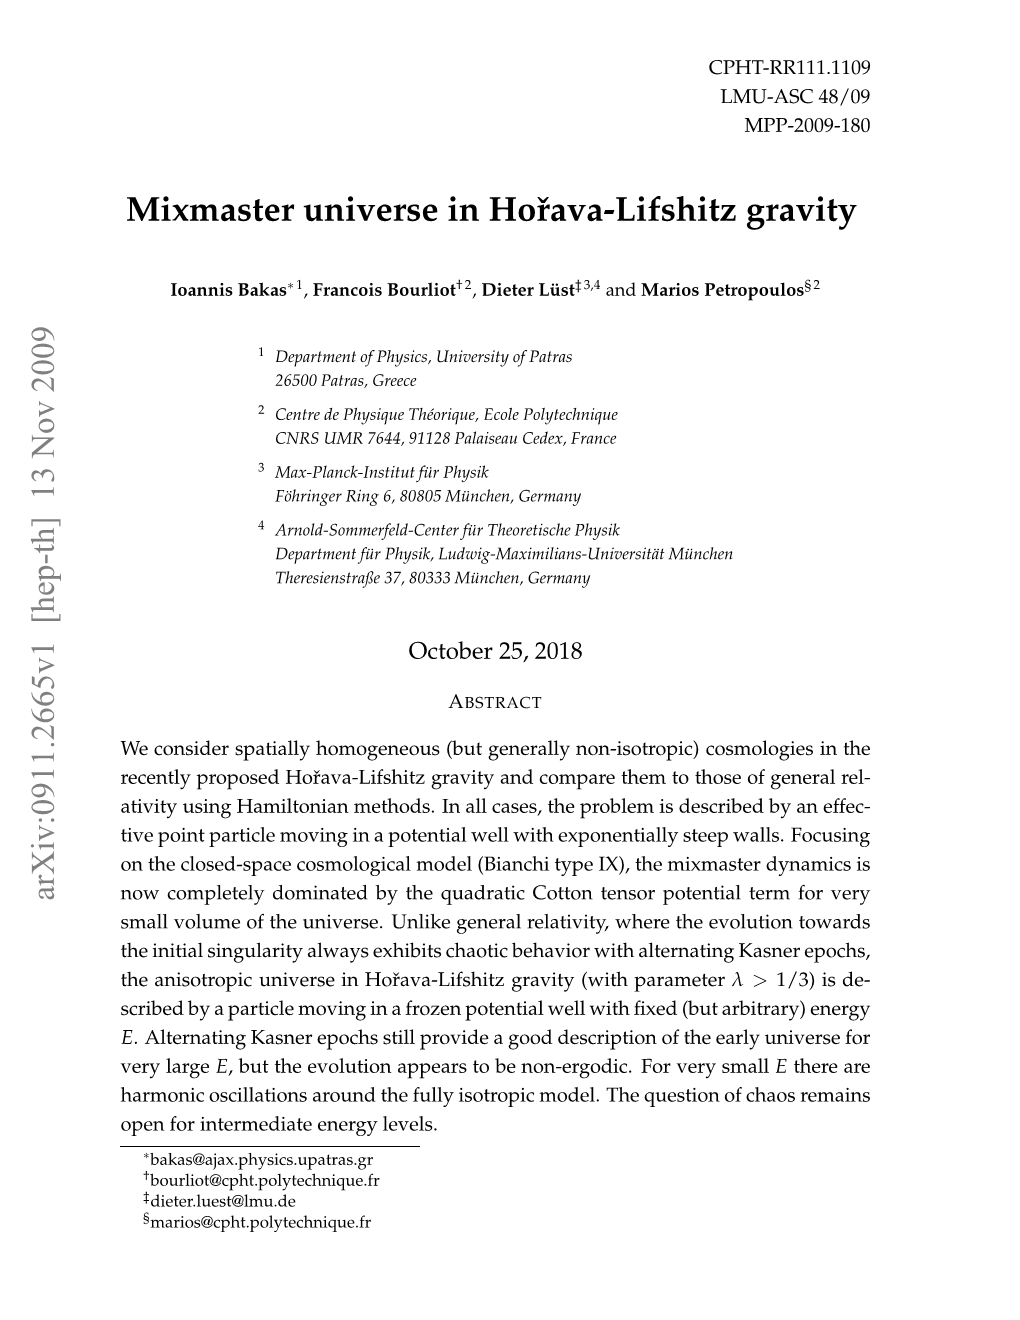 Mixmaster Universe in Horava-Lifshitz Gravity